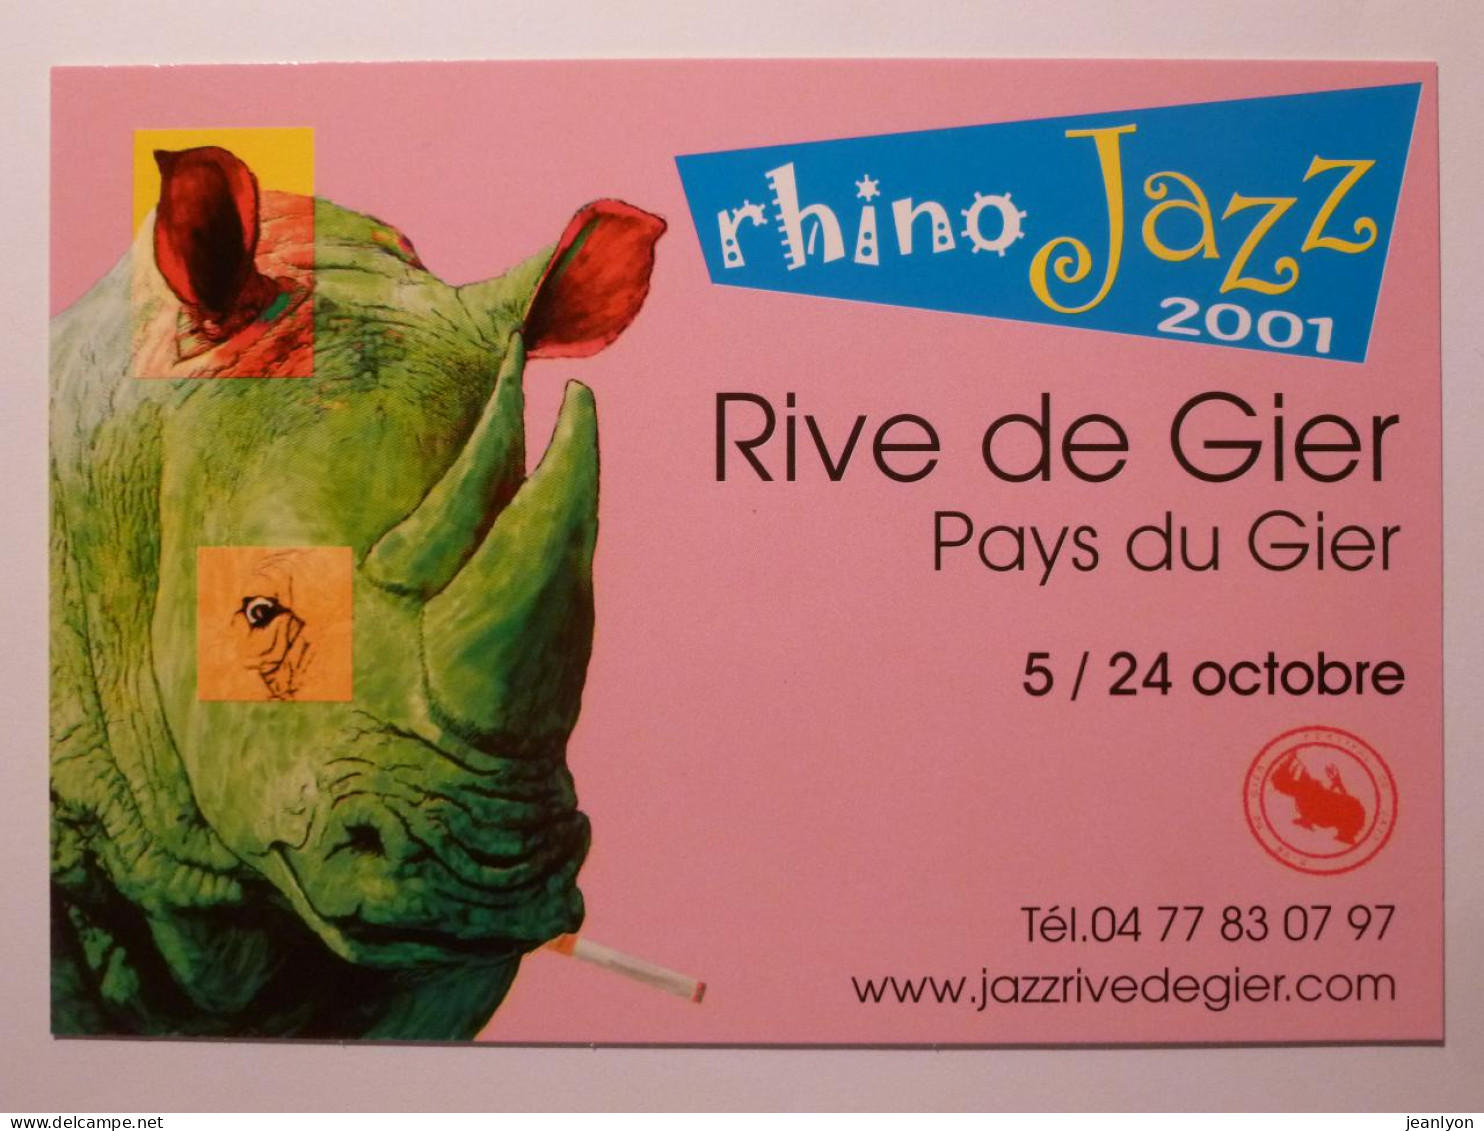 RHINOCEROS VERT Avec Cigarette Dans La Bouche - Rhino Jazz 2001 - Rive De Gier ( Loire ) - Carte Publicitaire - Rhinozeros